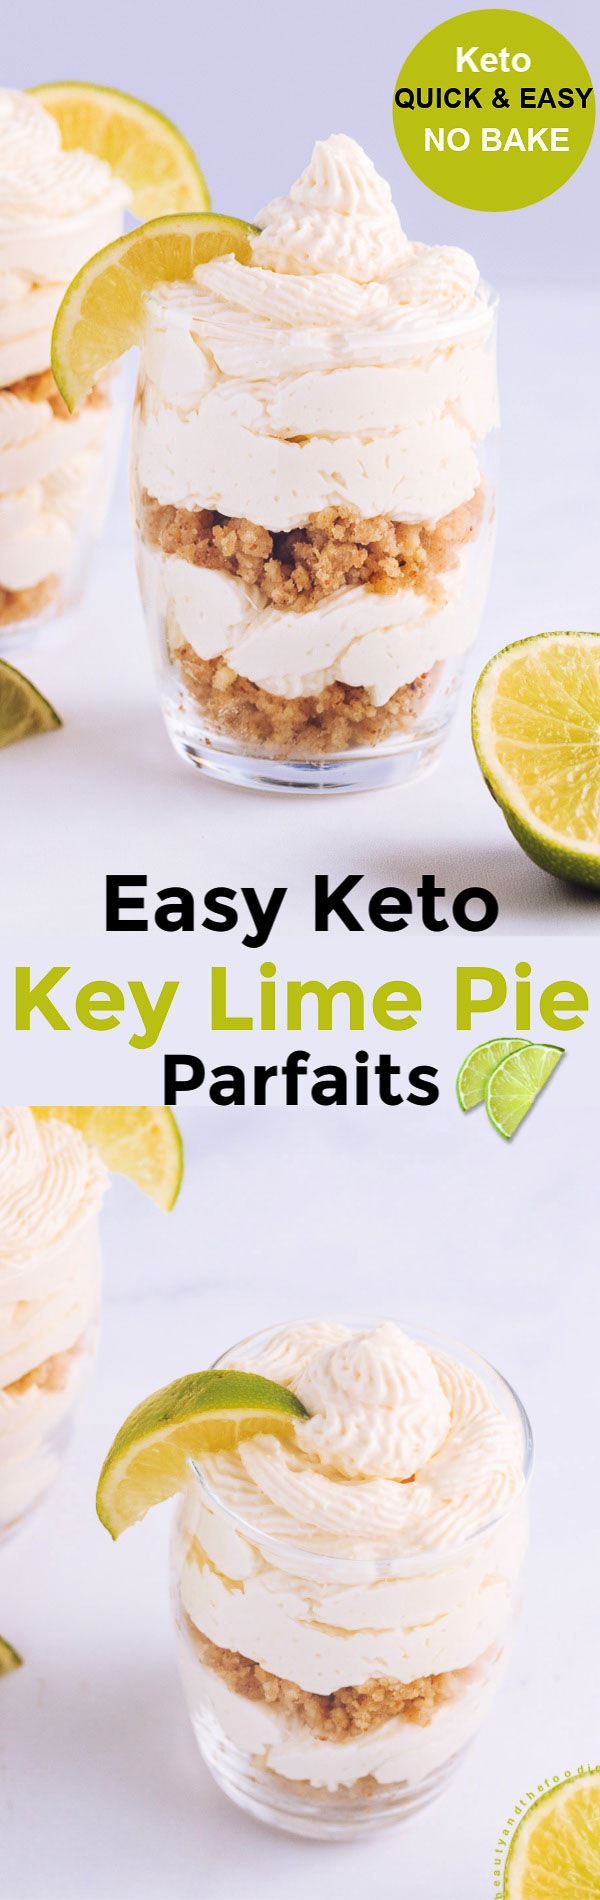 Keto Key Lime Pie Parfaits